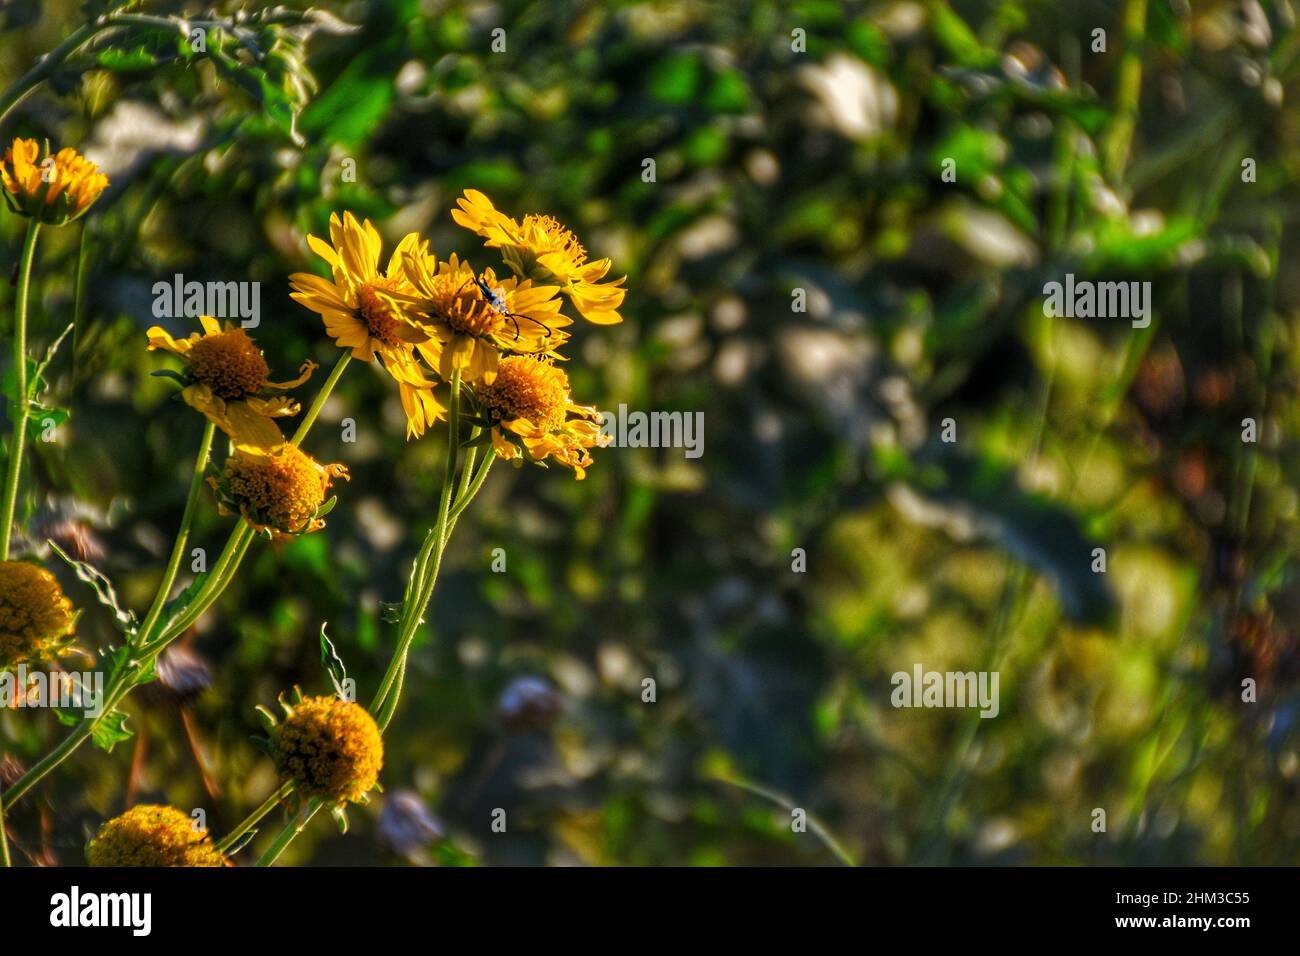 Closeup of Verbesina encelioides, names include golden crownbeard, gold weed, wild sunflower. Stock Photo